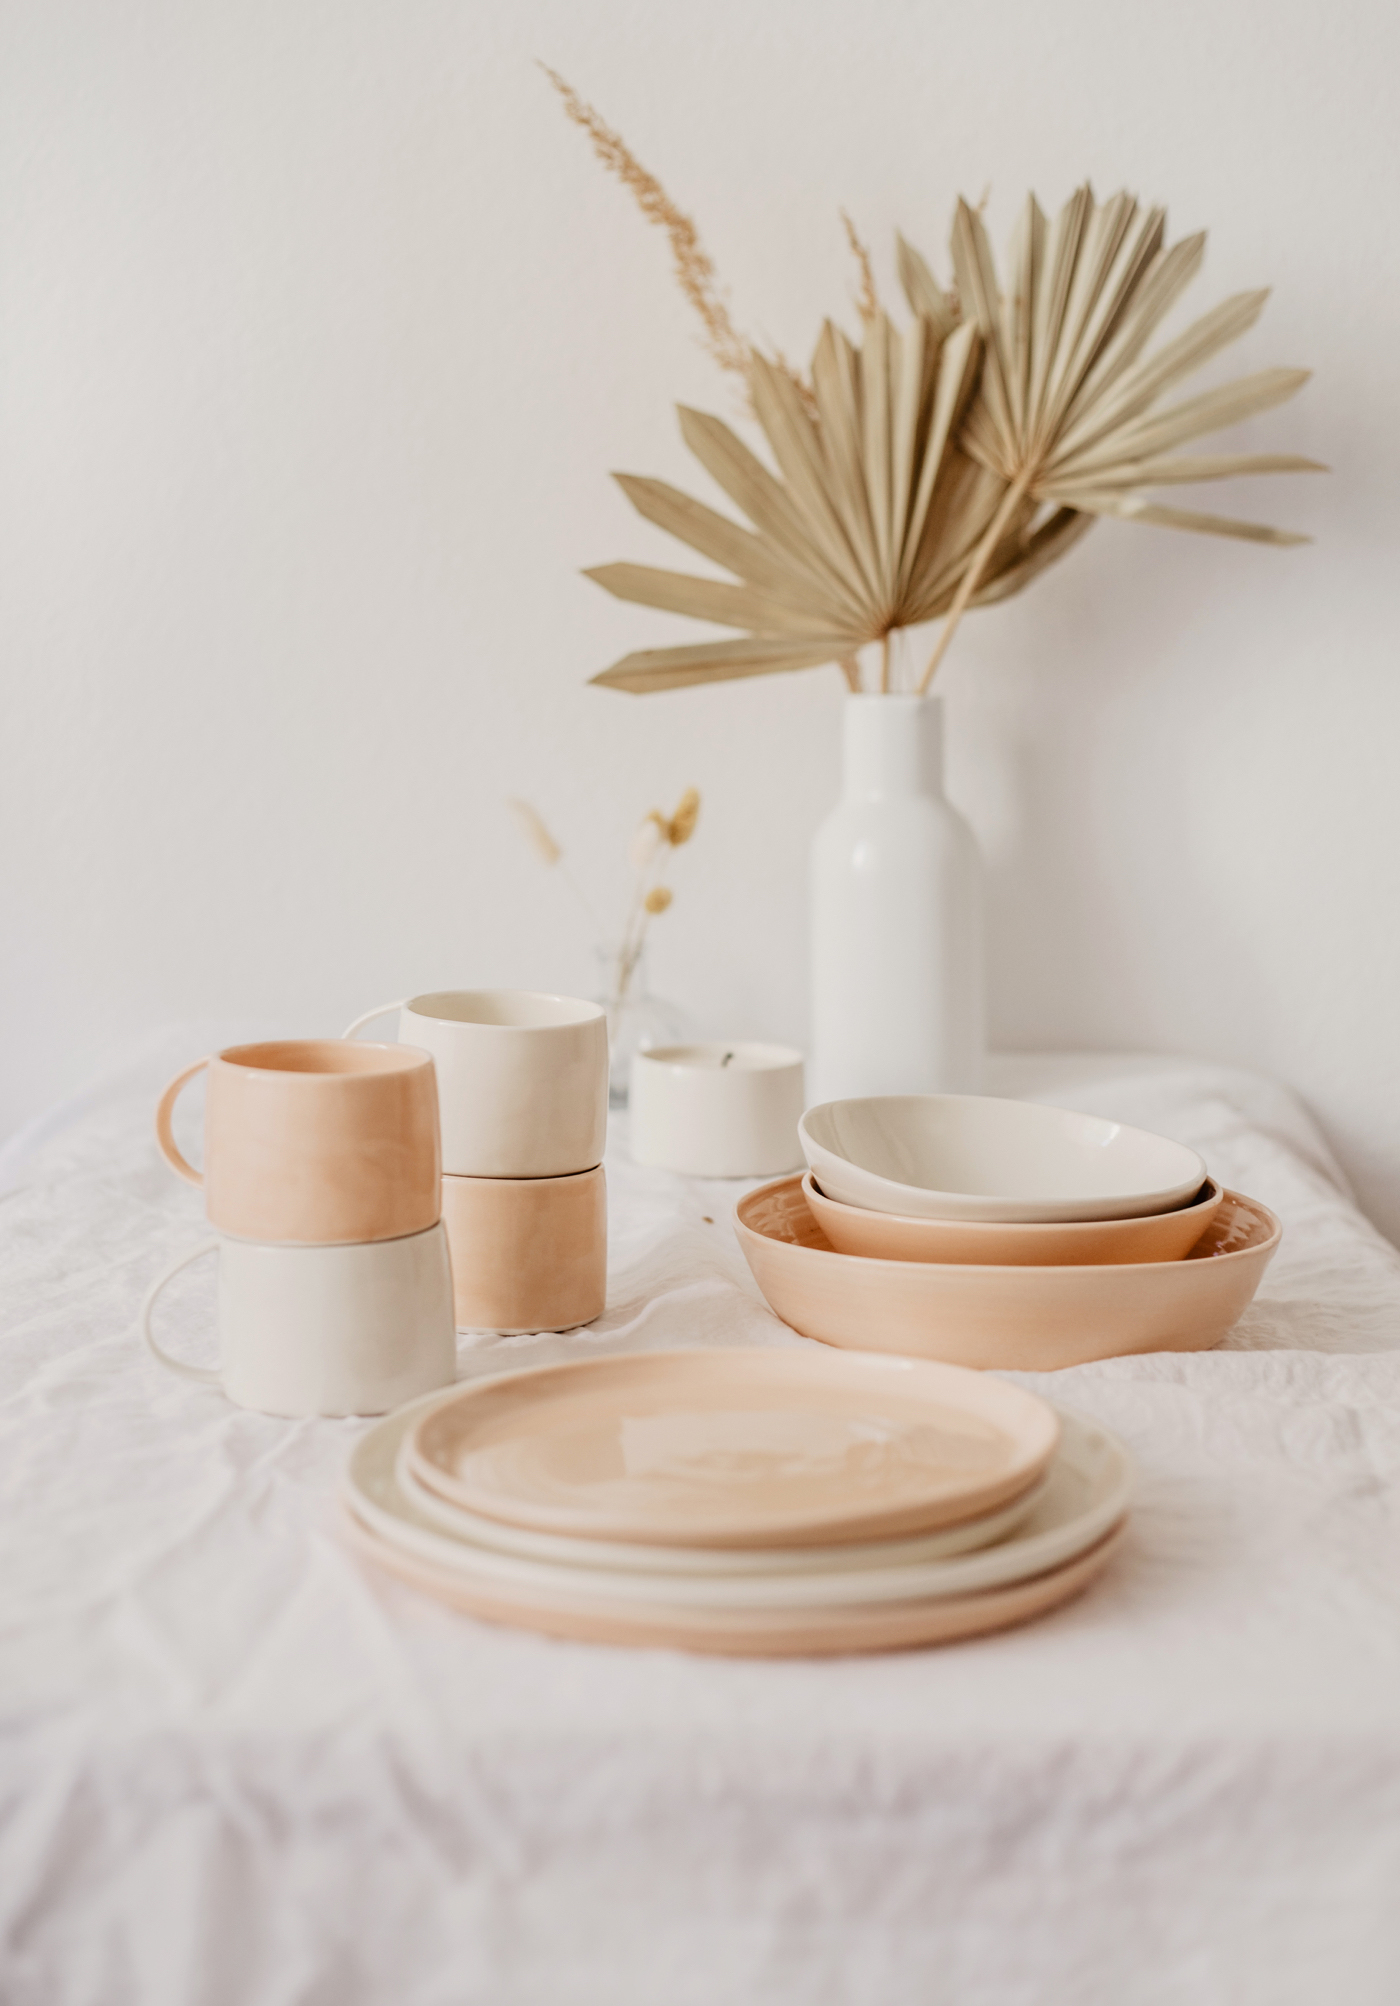 handmade keramik weiss rosa skandinavisch